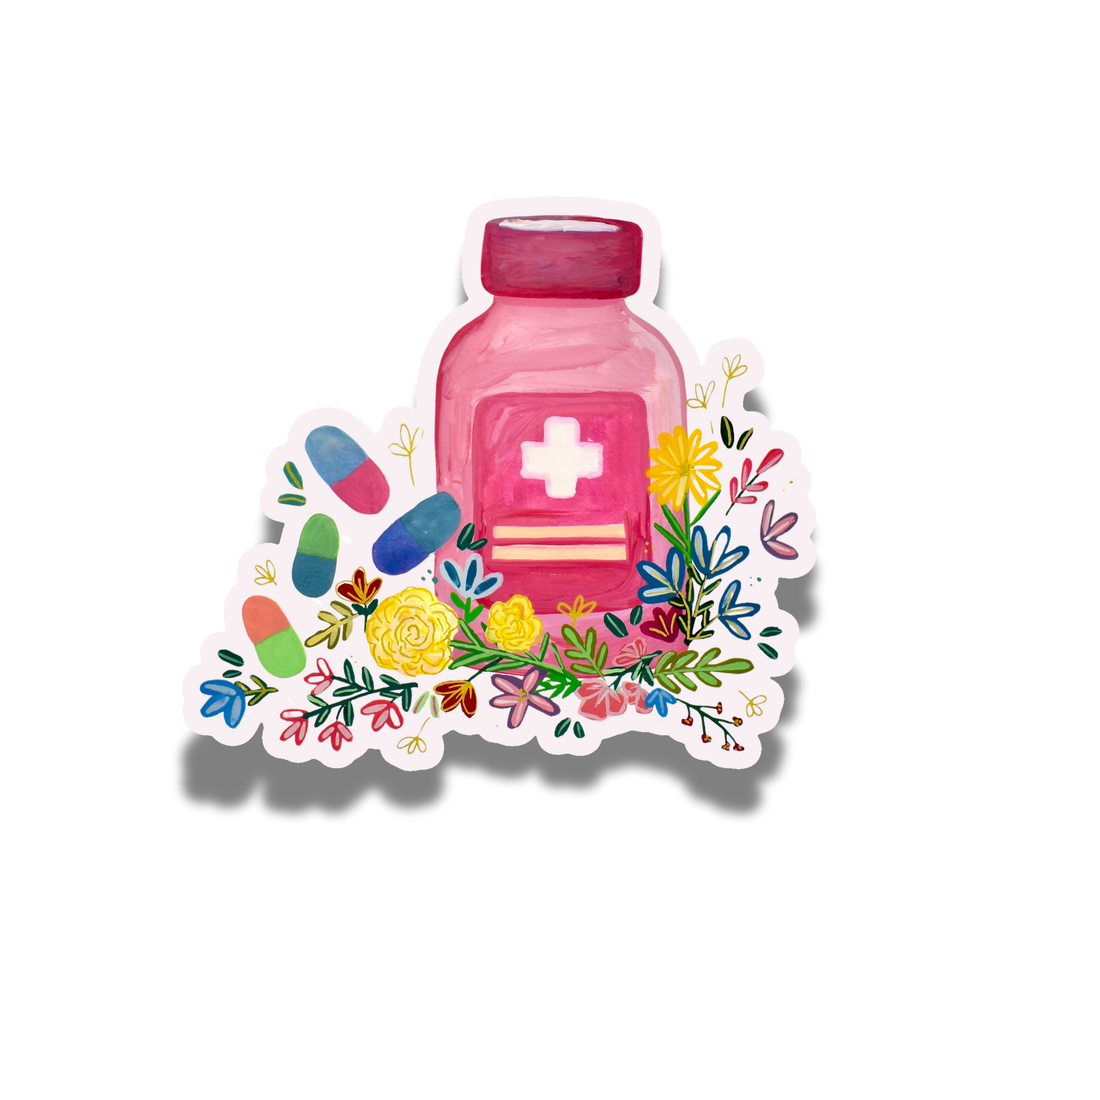 Pharmacology sticker